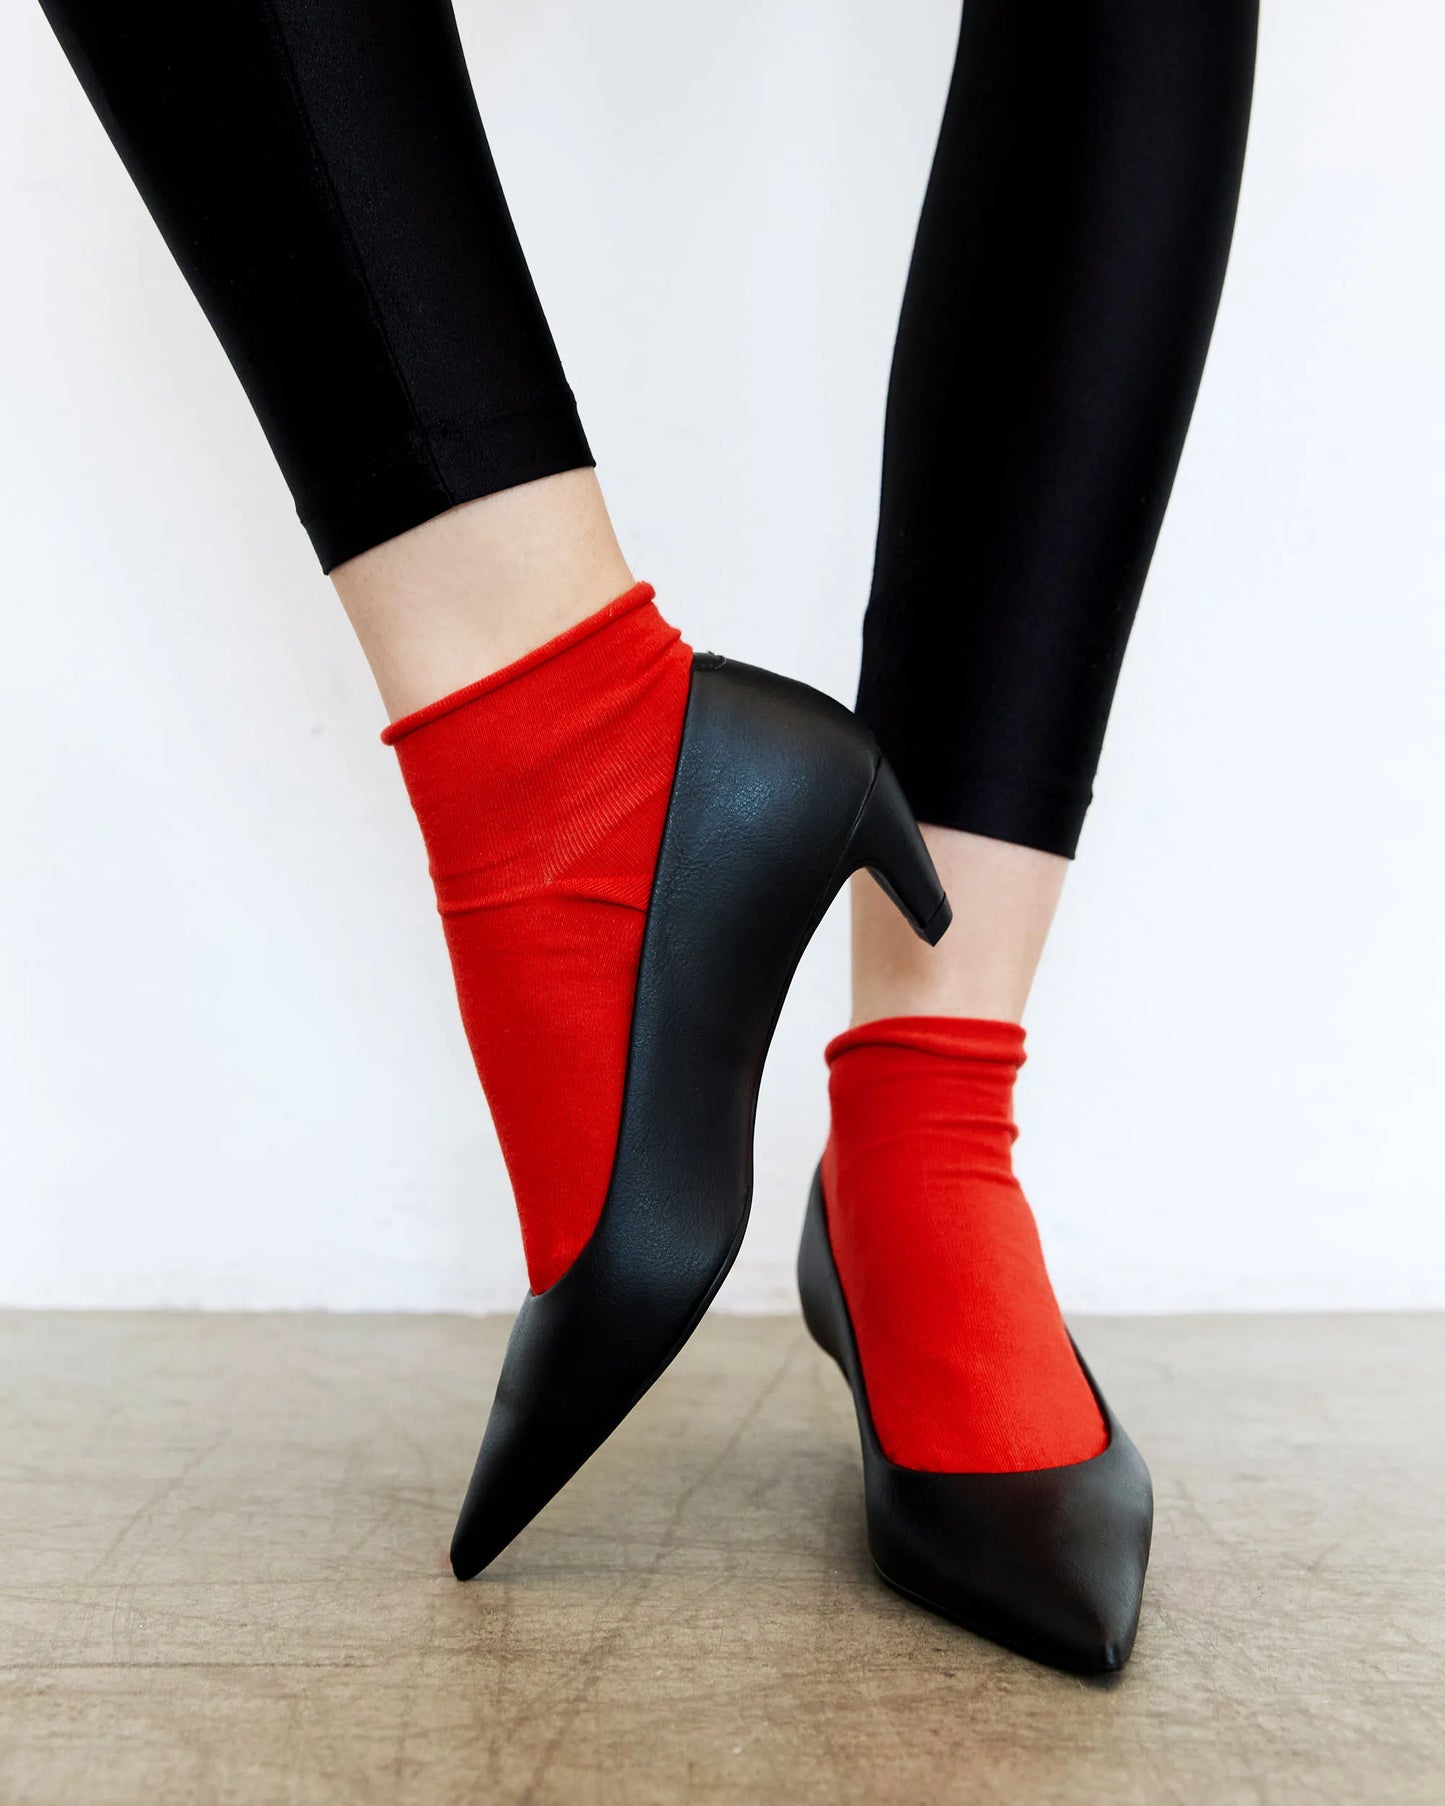 Siren Heels kitten heels style shoes made of grape-based vegan leather